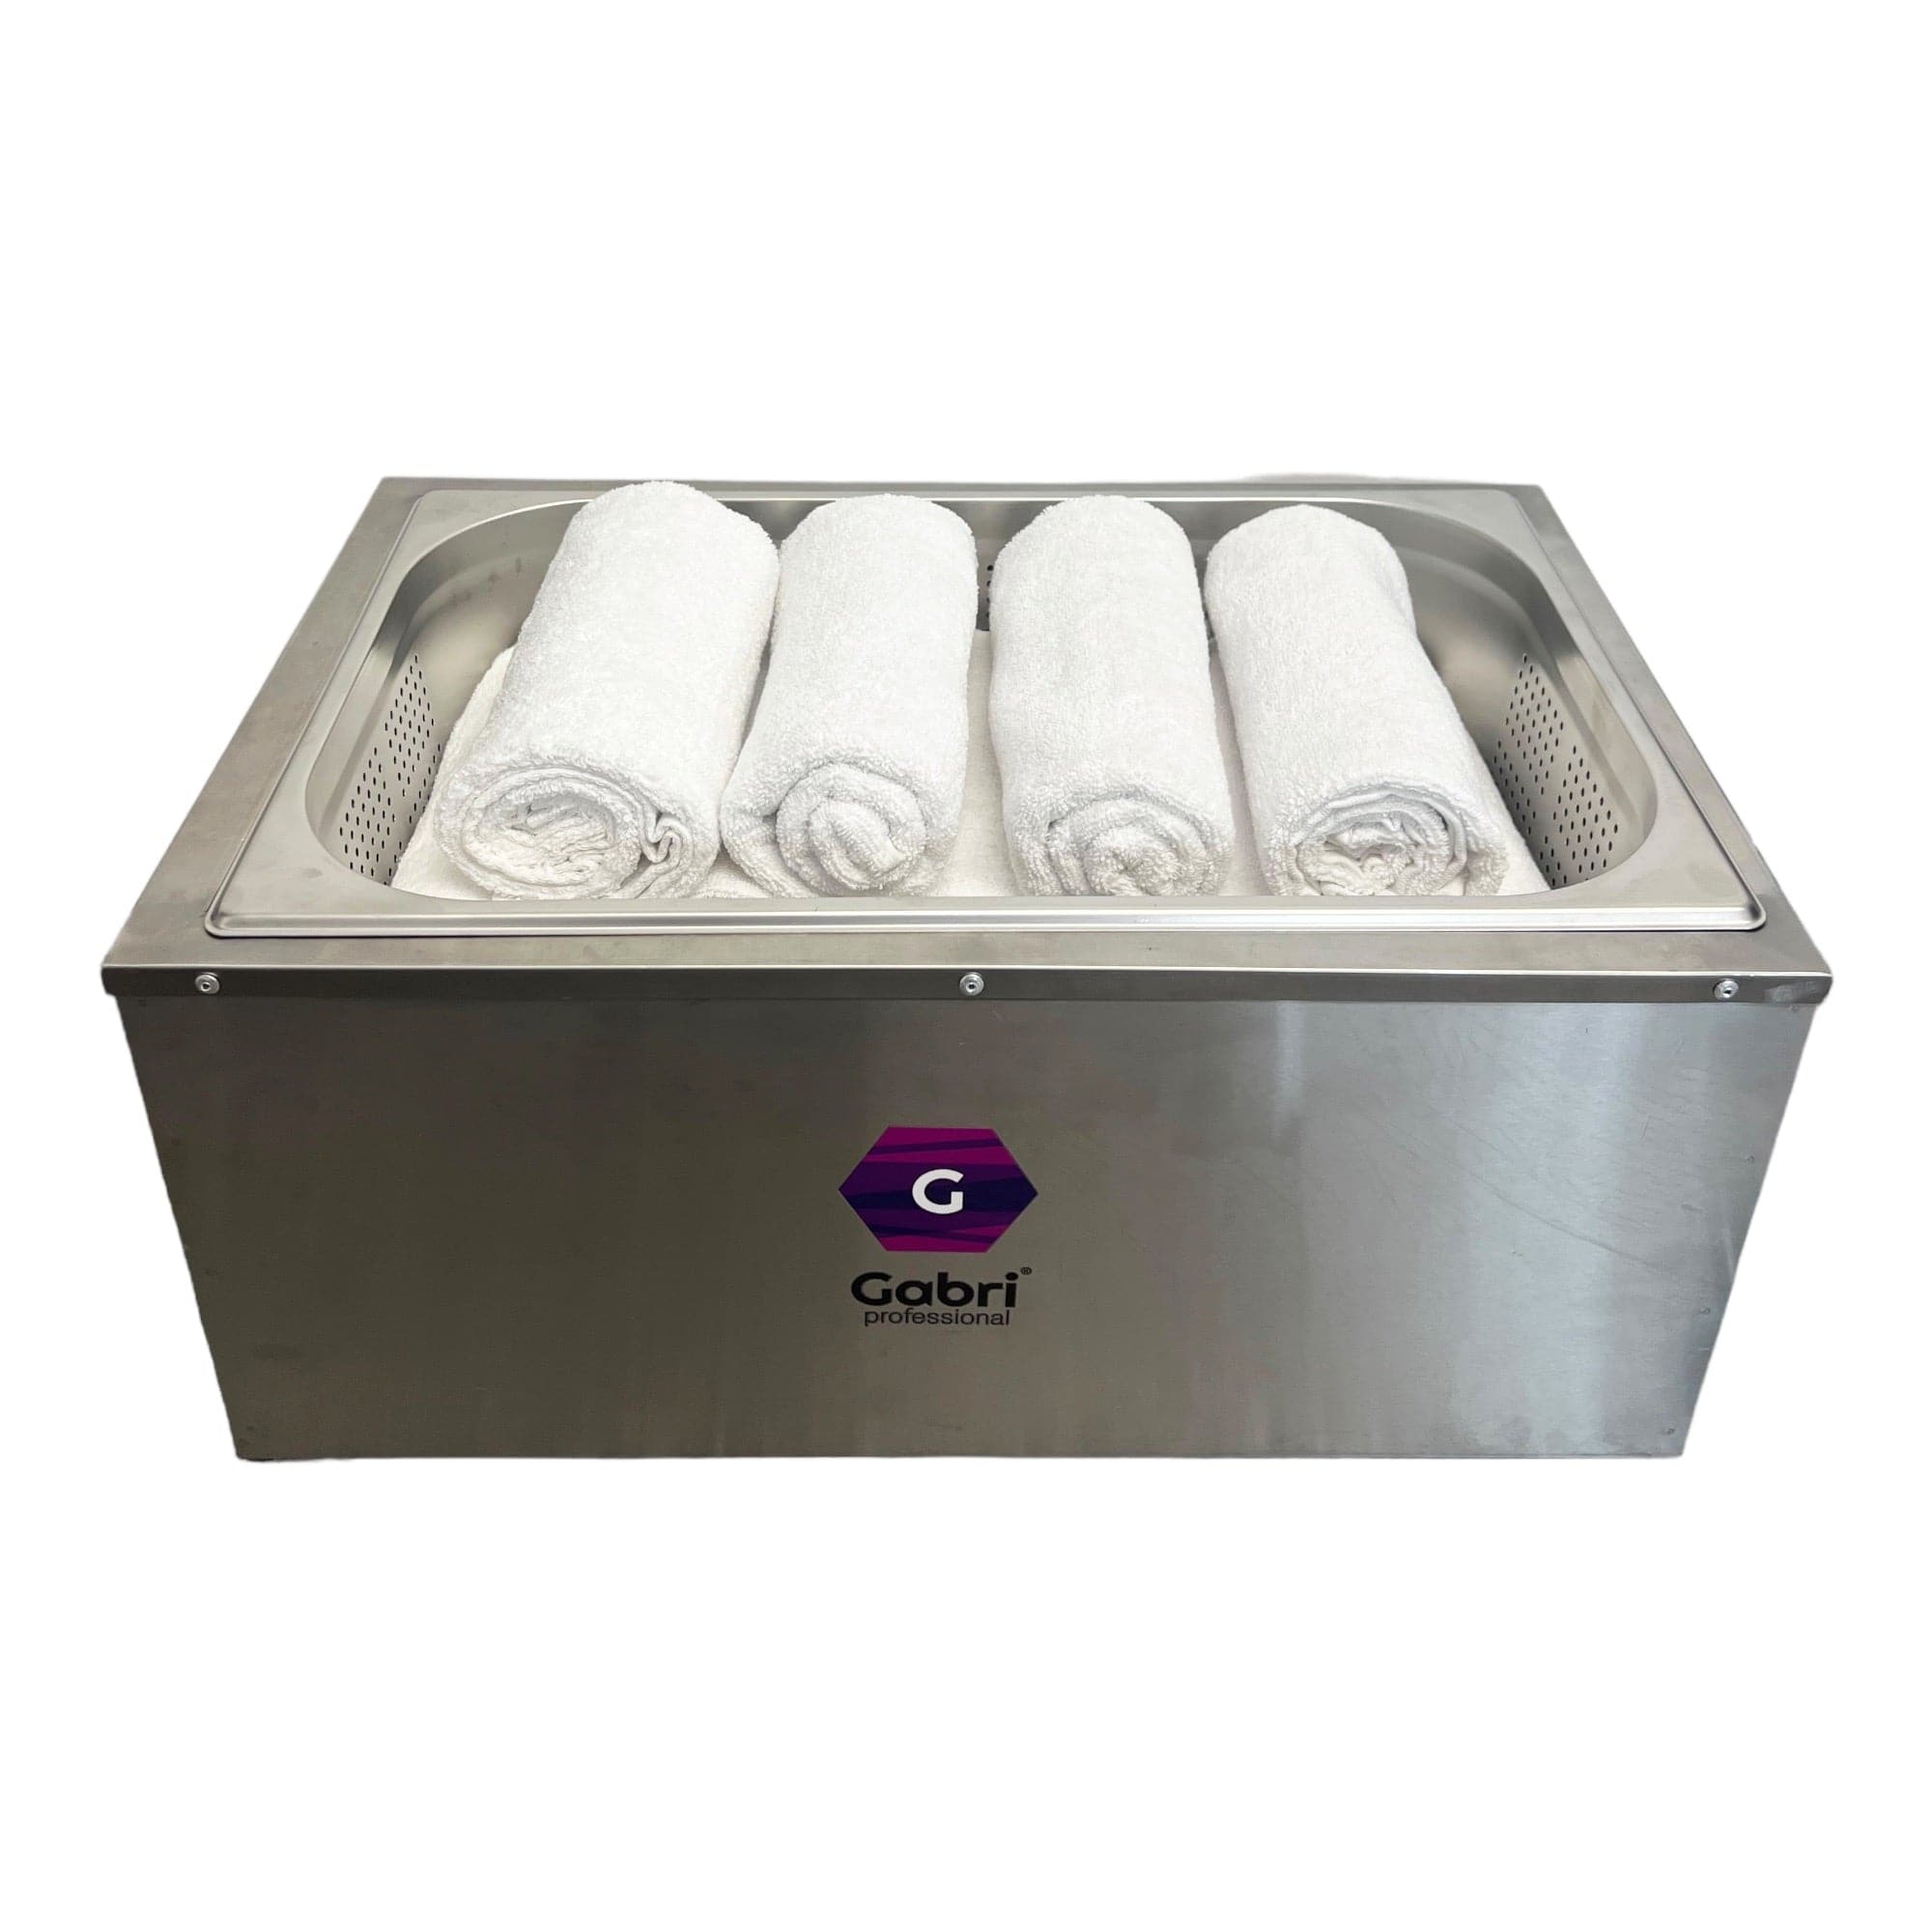 Gabri - Towel Warmer Electric Wet Heat Hot Towel With Drain Tap